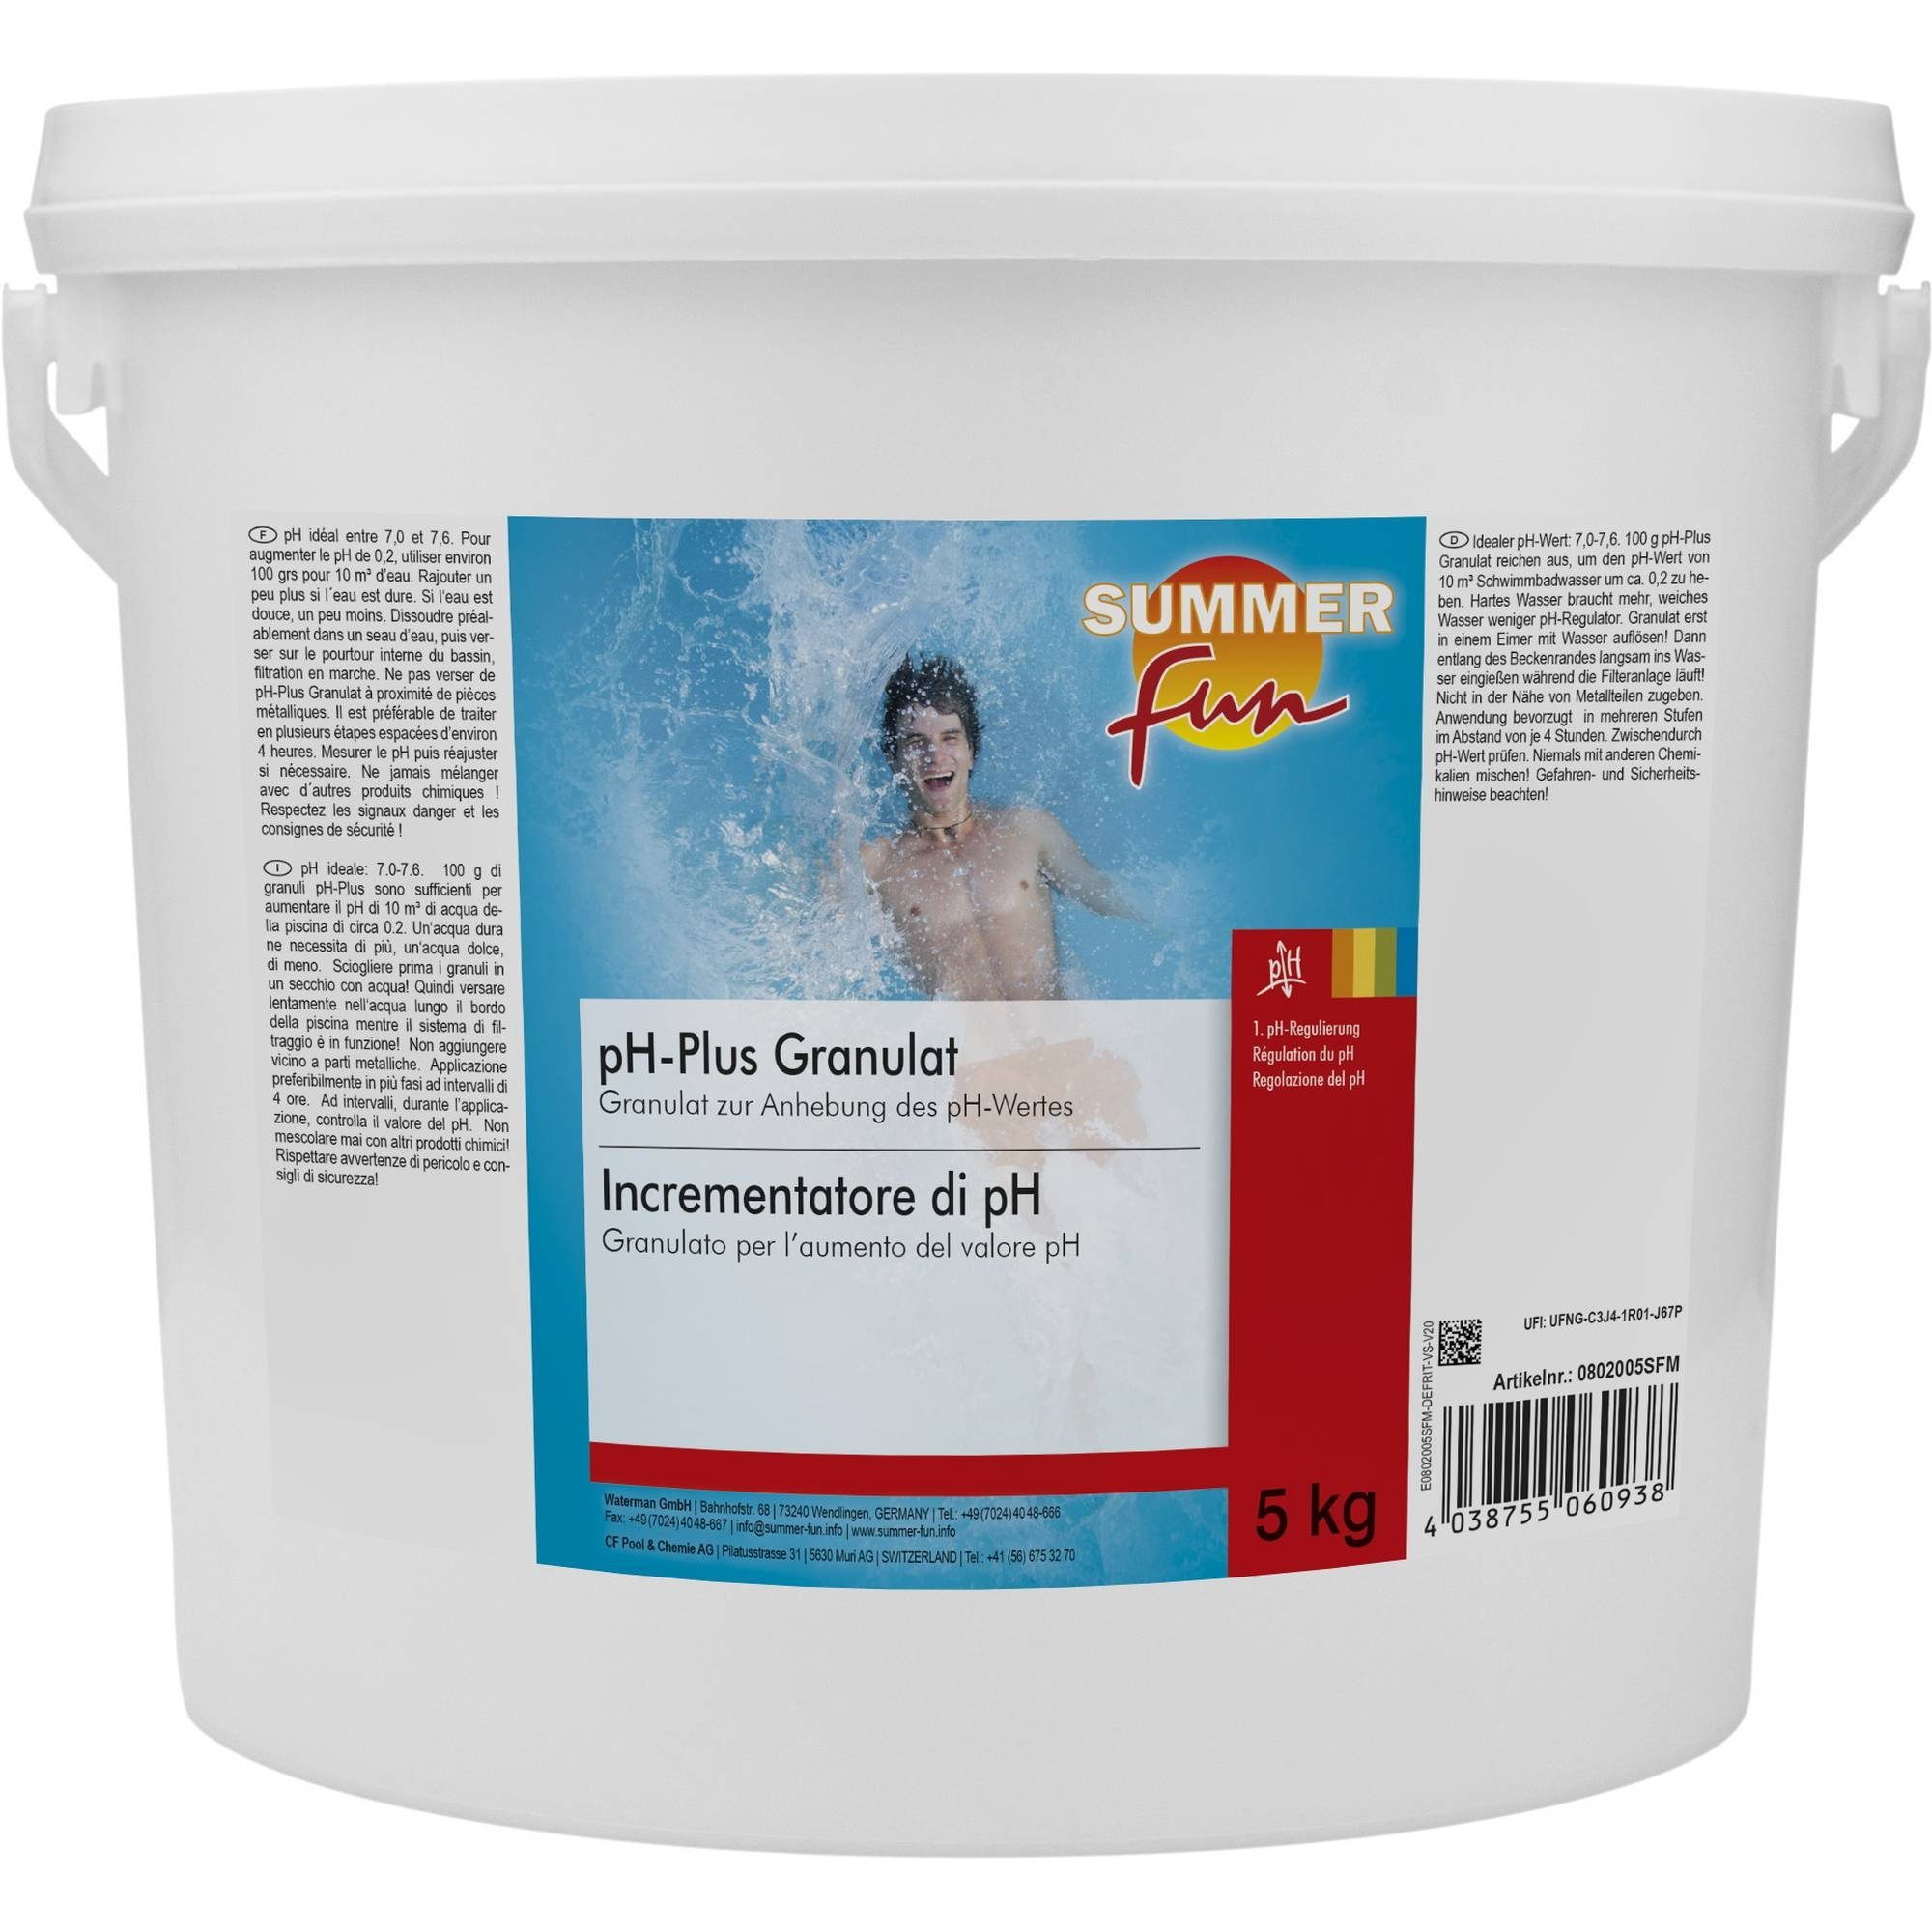 SUMMER FUN Poolpflege Summer Fun - pH-Plus Granulat, 5 kg